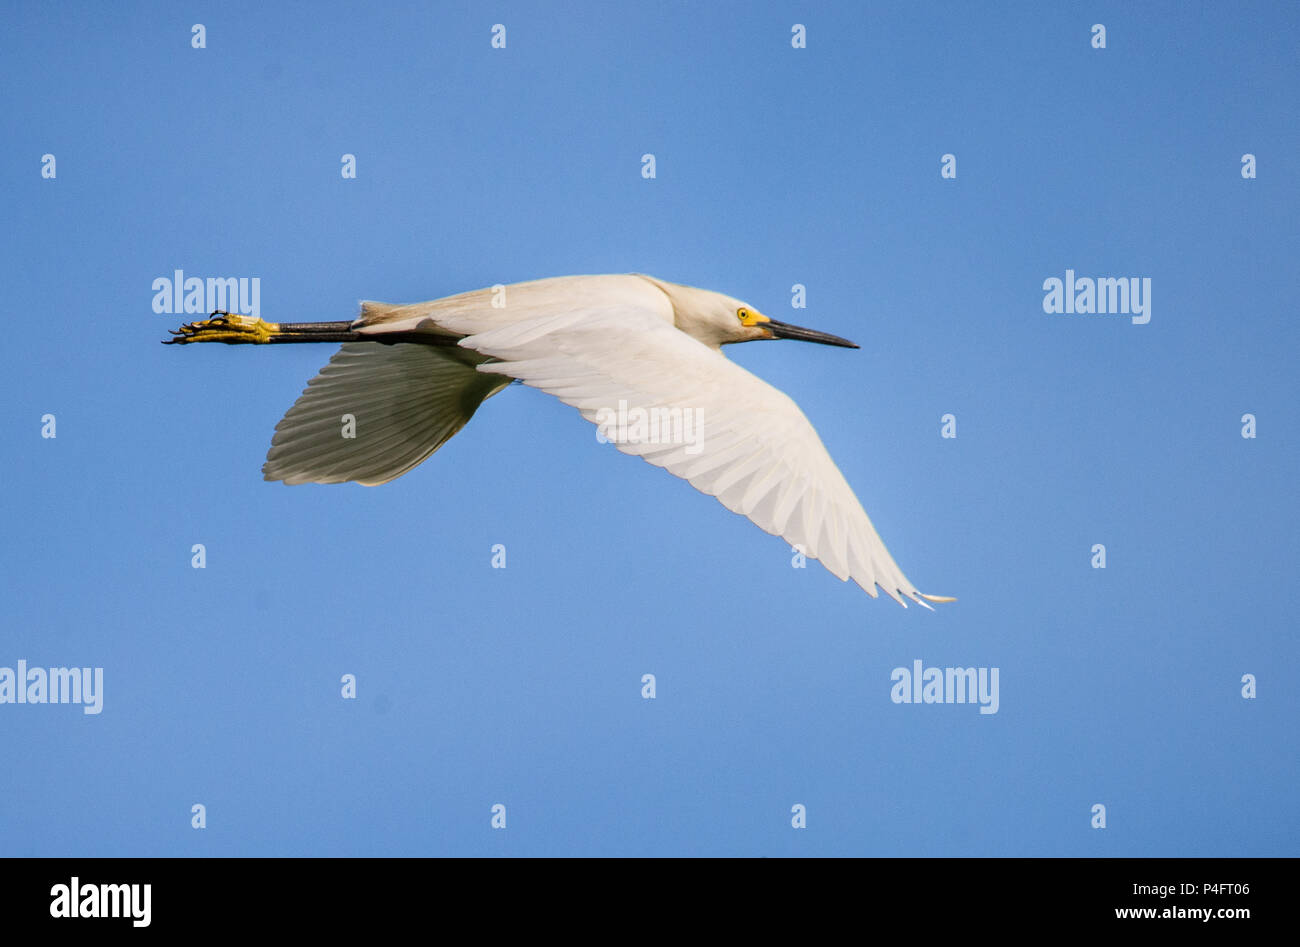 Mature Snowy Egret Egretta Thula flying showing black beak and yellow feet Stock Photo